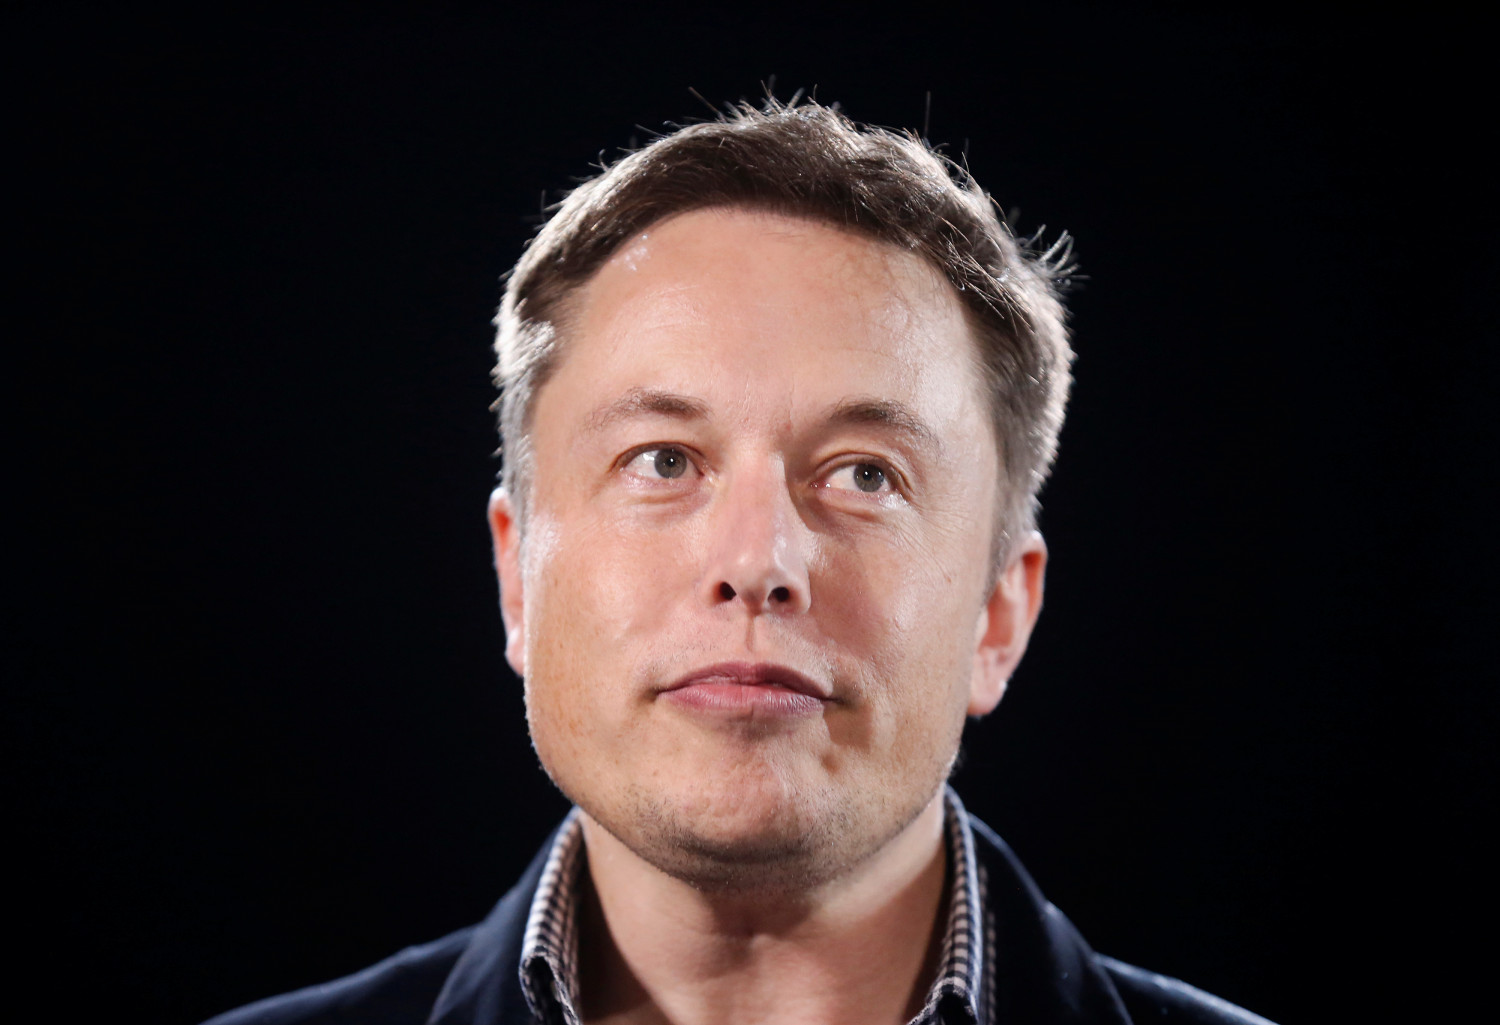 Escuchar música, sí; resolver dudas, no: la política de comunicación de Elon Musk